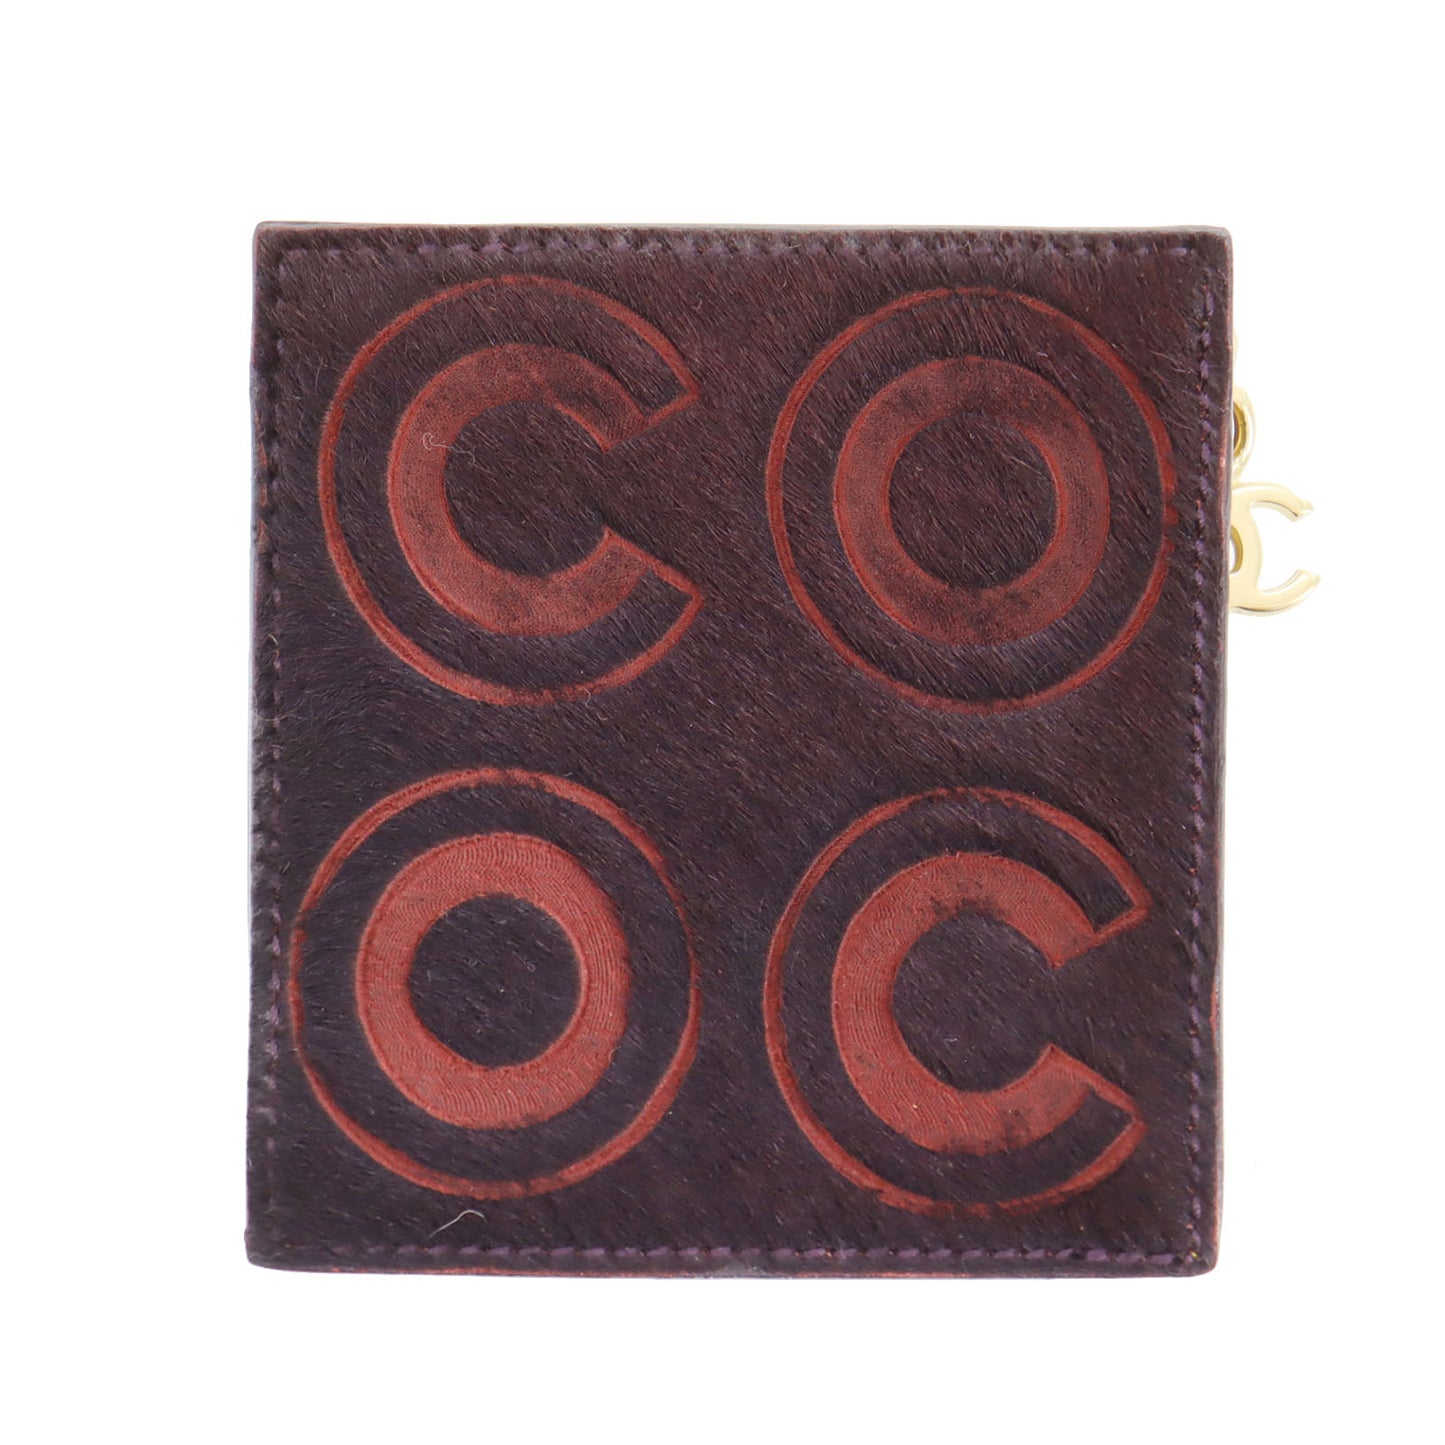 CHANEL Logos Coin Purse Bordeaux Unborn Calf Leather #CF180